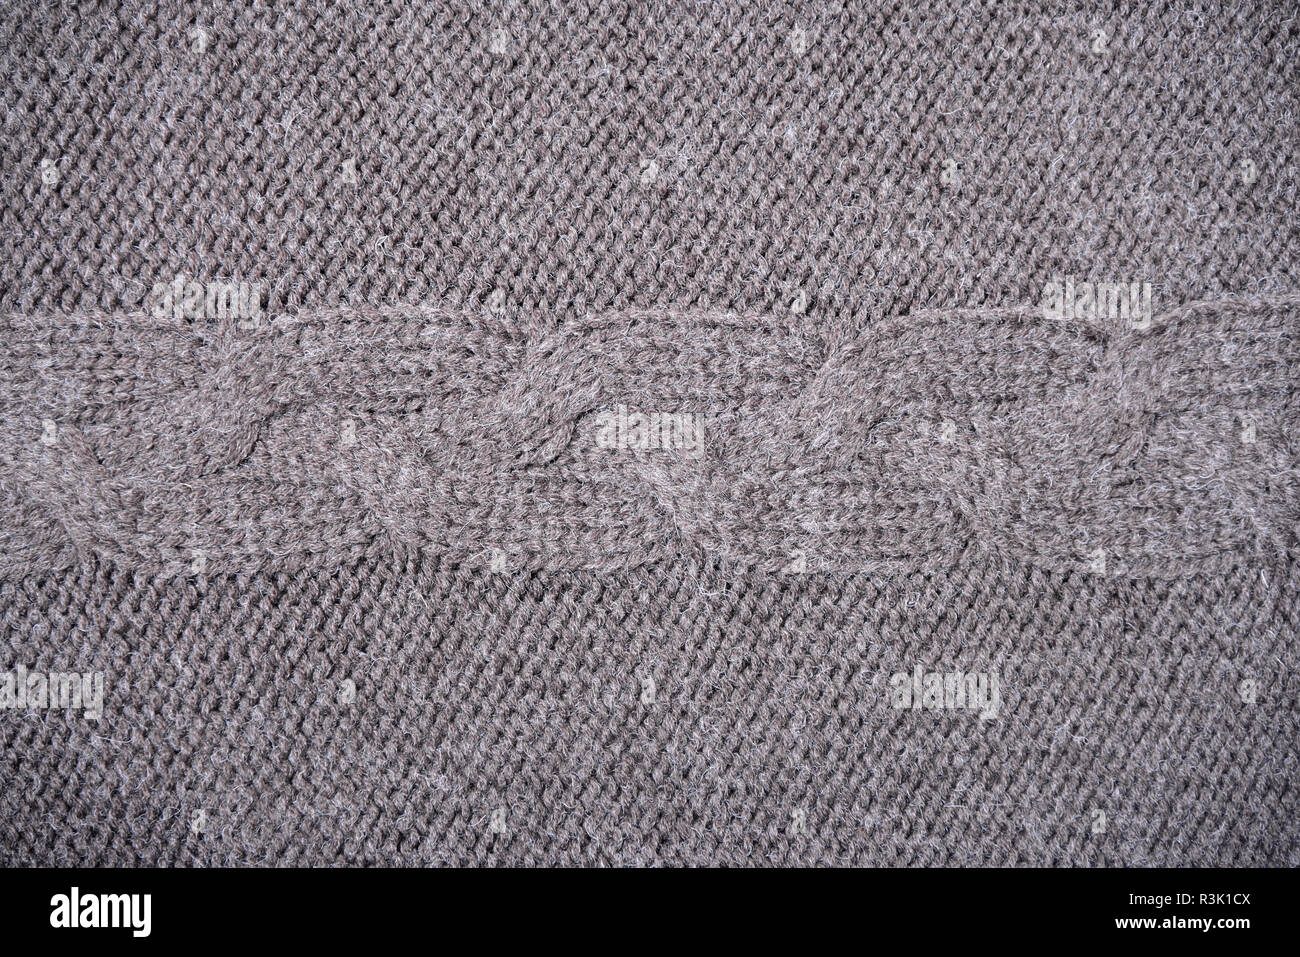 wool knitted fabric pattern Stock Photo